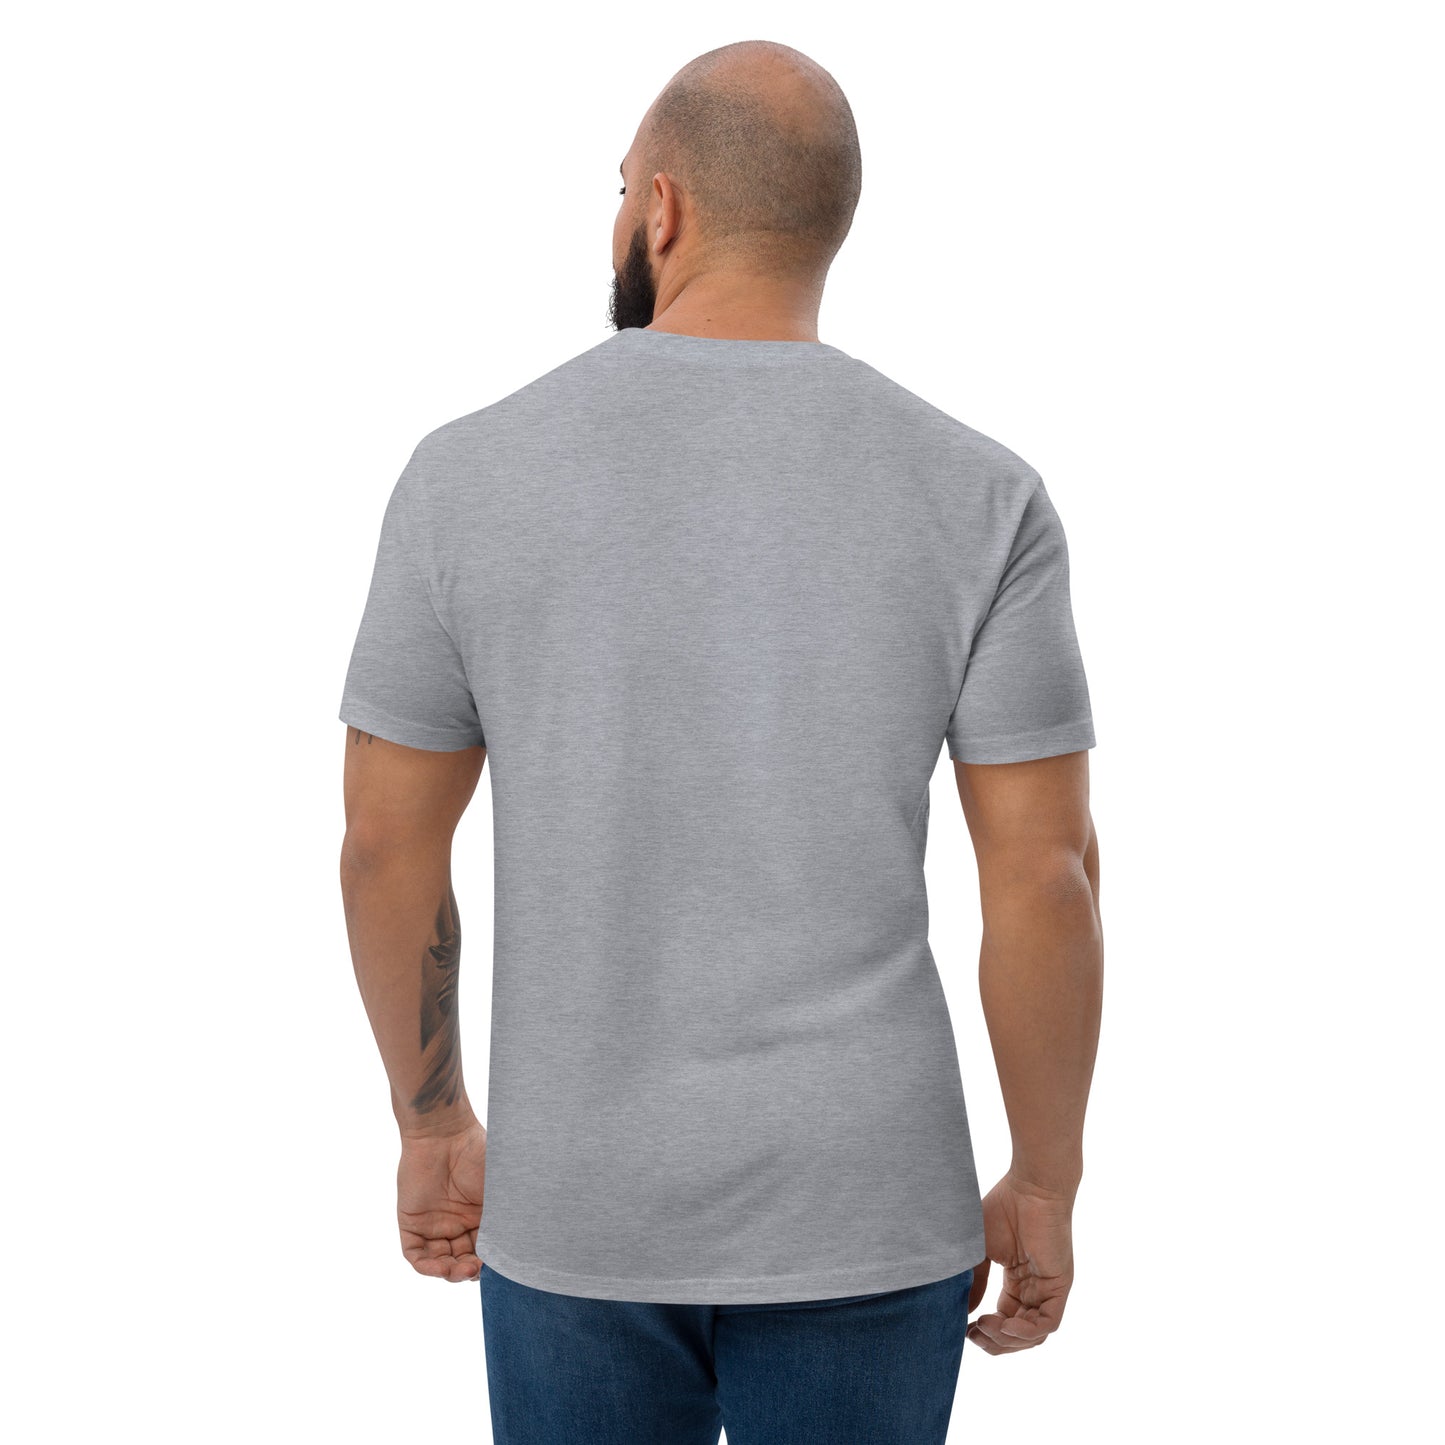 HEARD Fitted Short Sleeve T-shirt